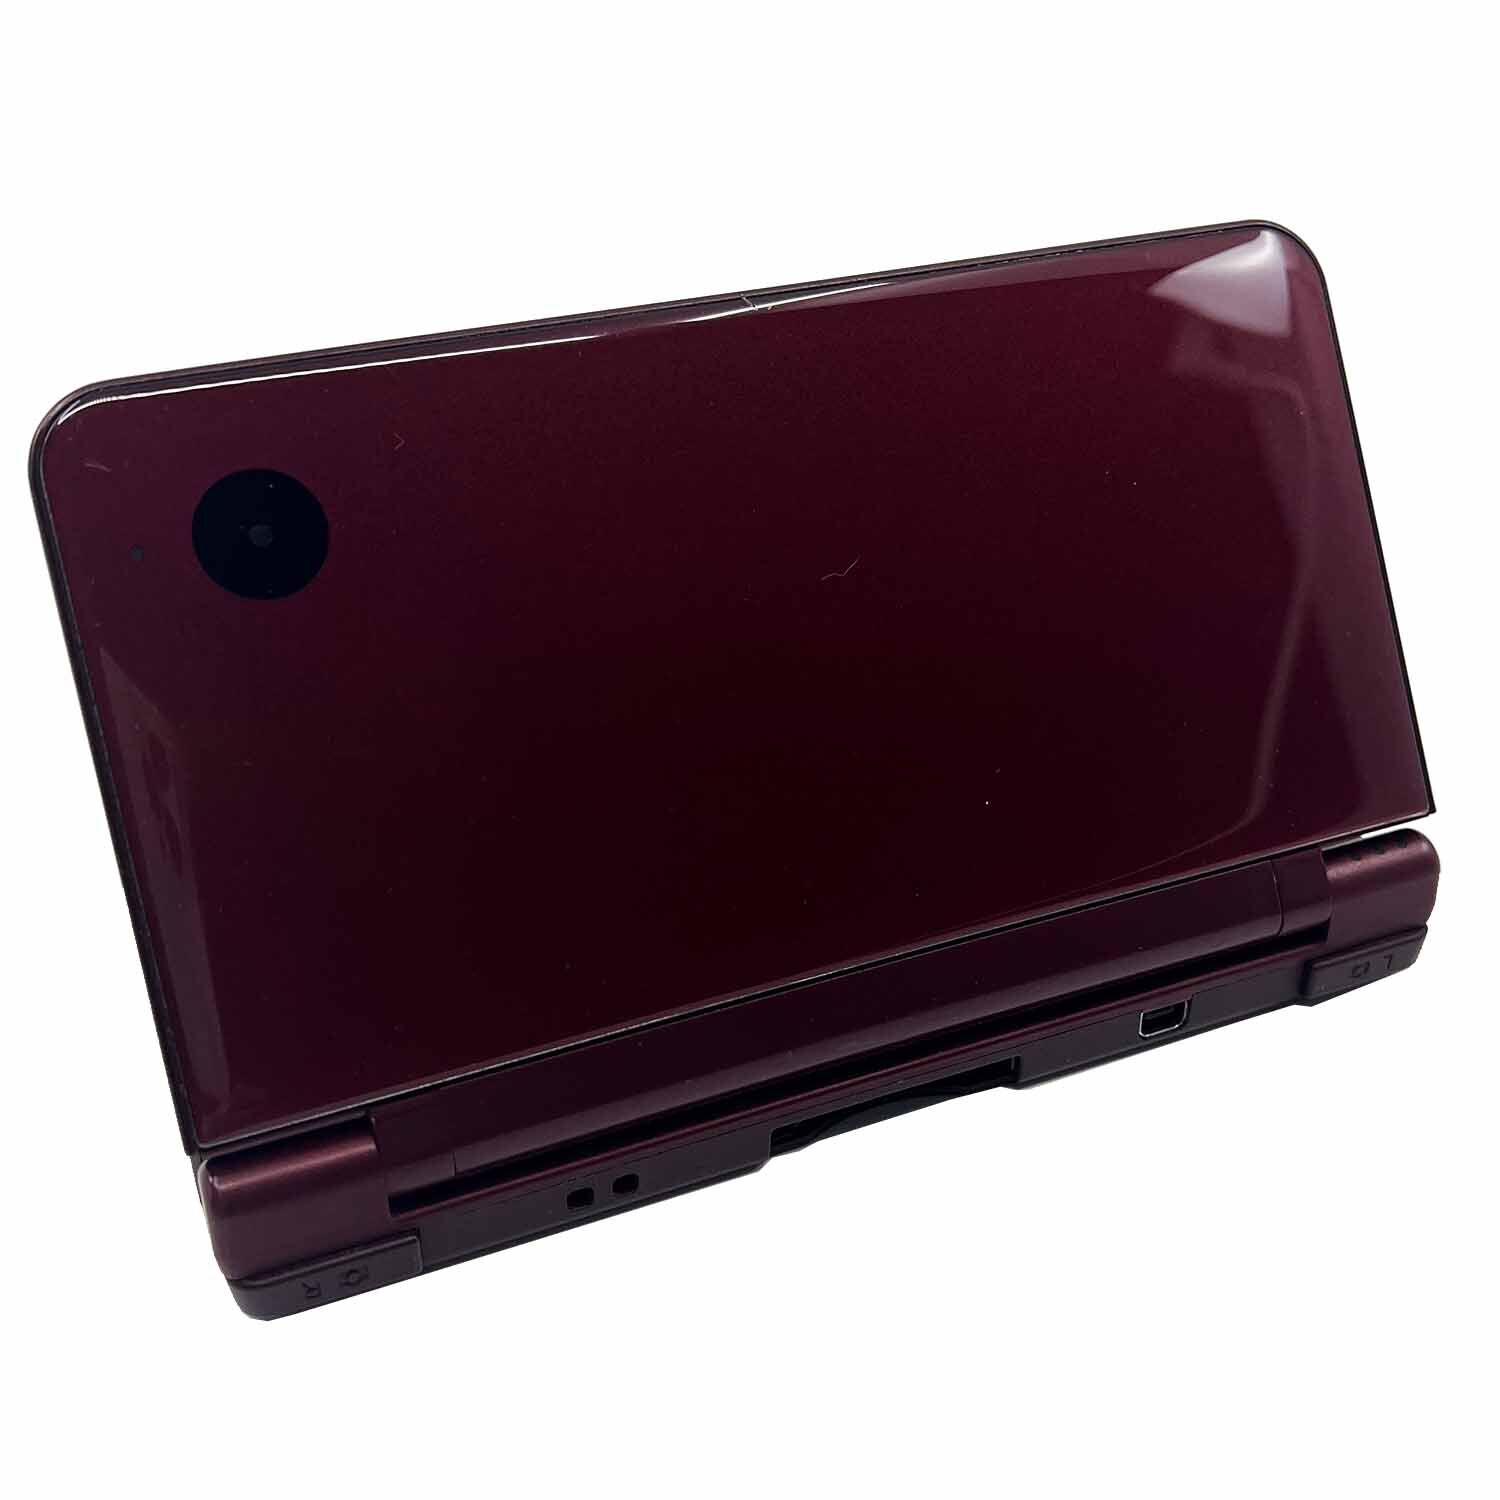 Nintendo DSi XL Weinrot/Wine red